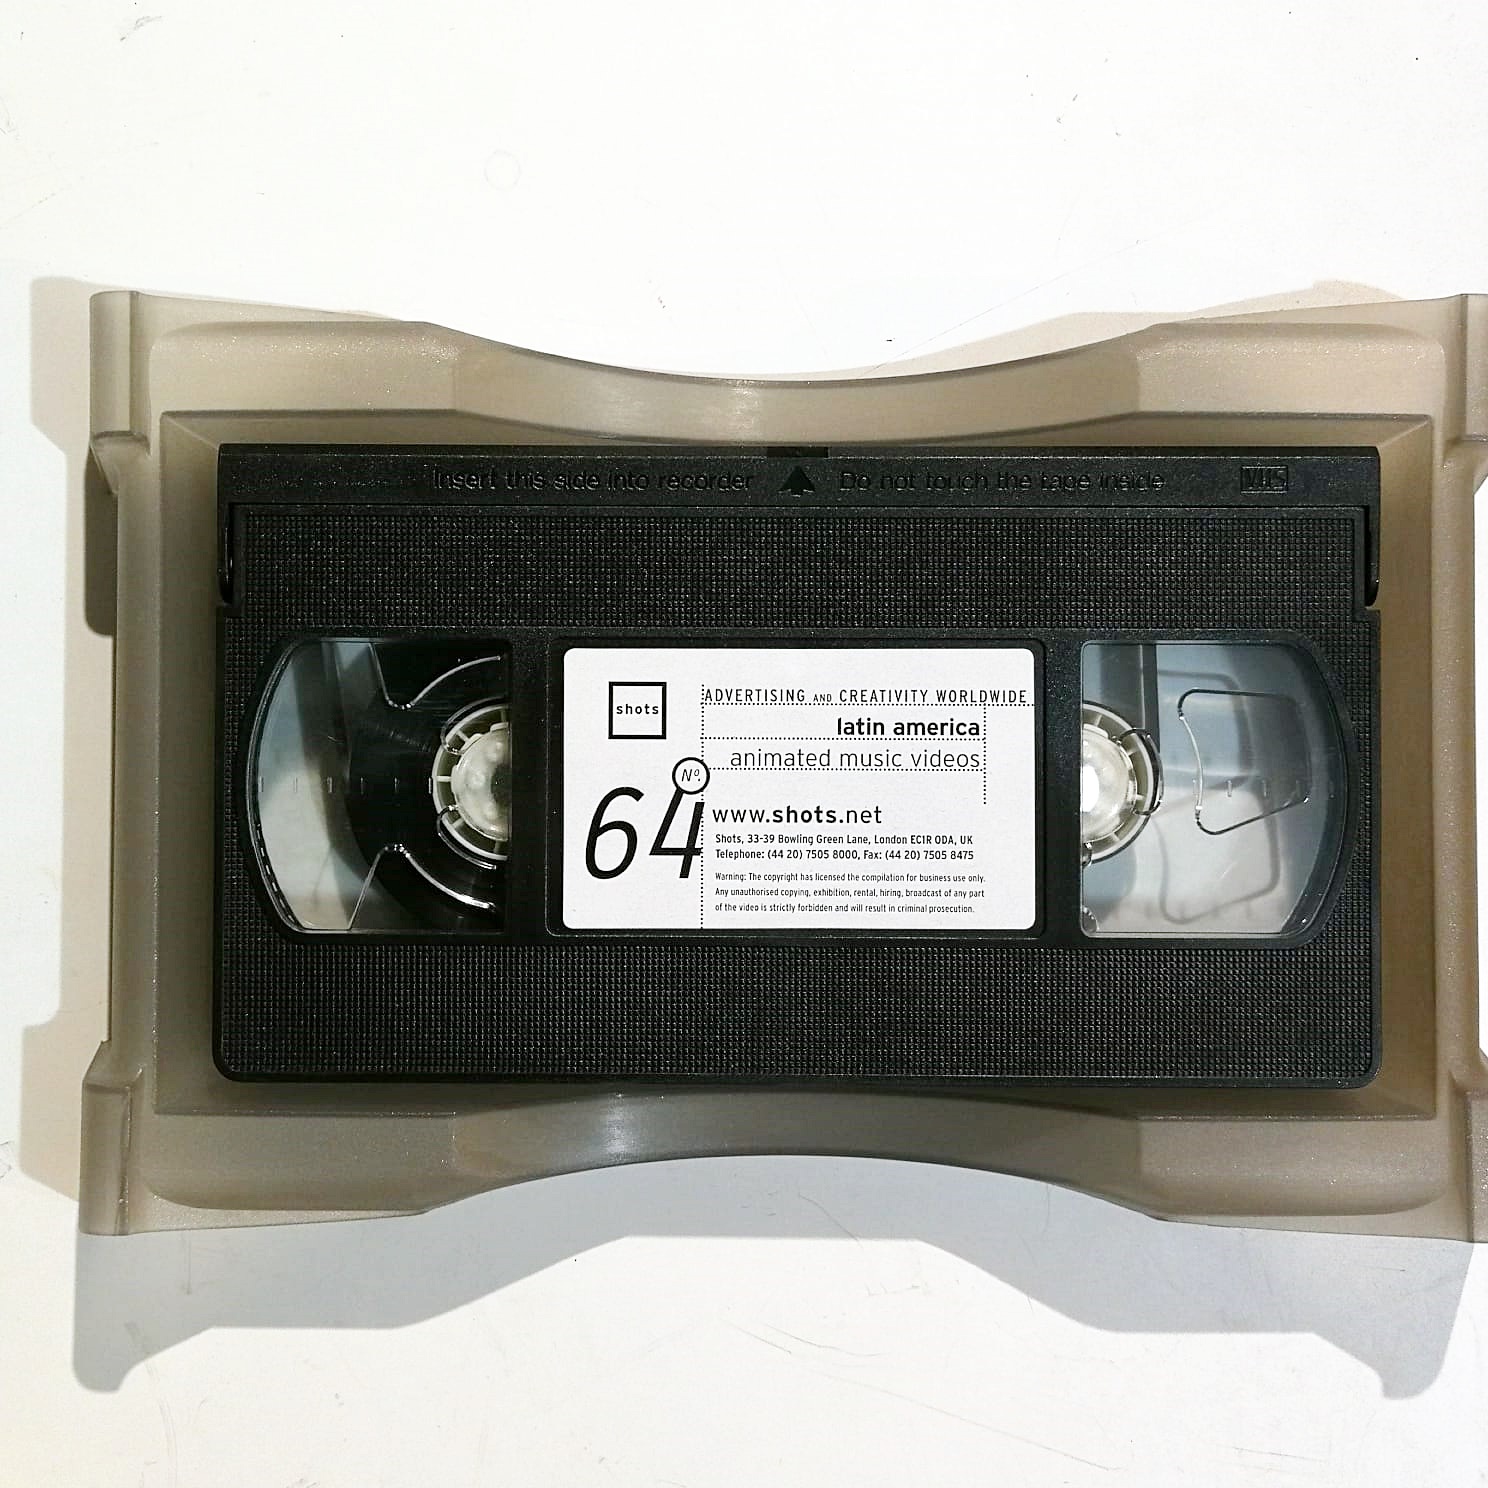 SHOTS No.64 - Advertising And Creativity Worldwide - Latin America - Animated Music Video - VHS Kaset